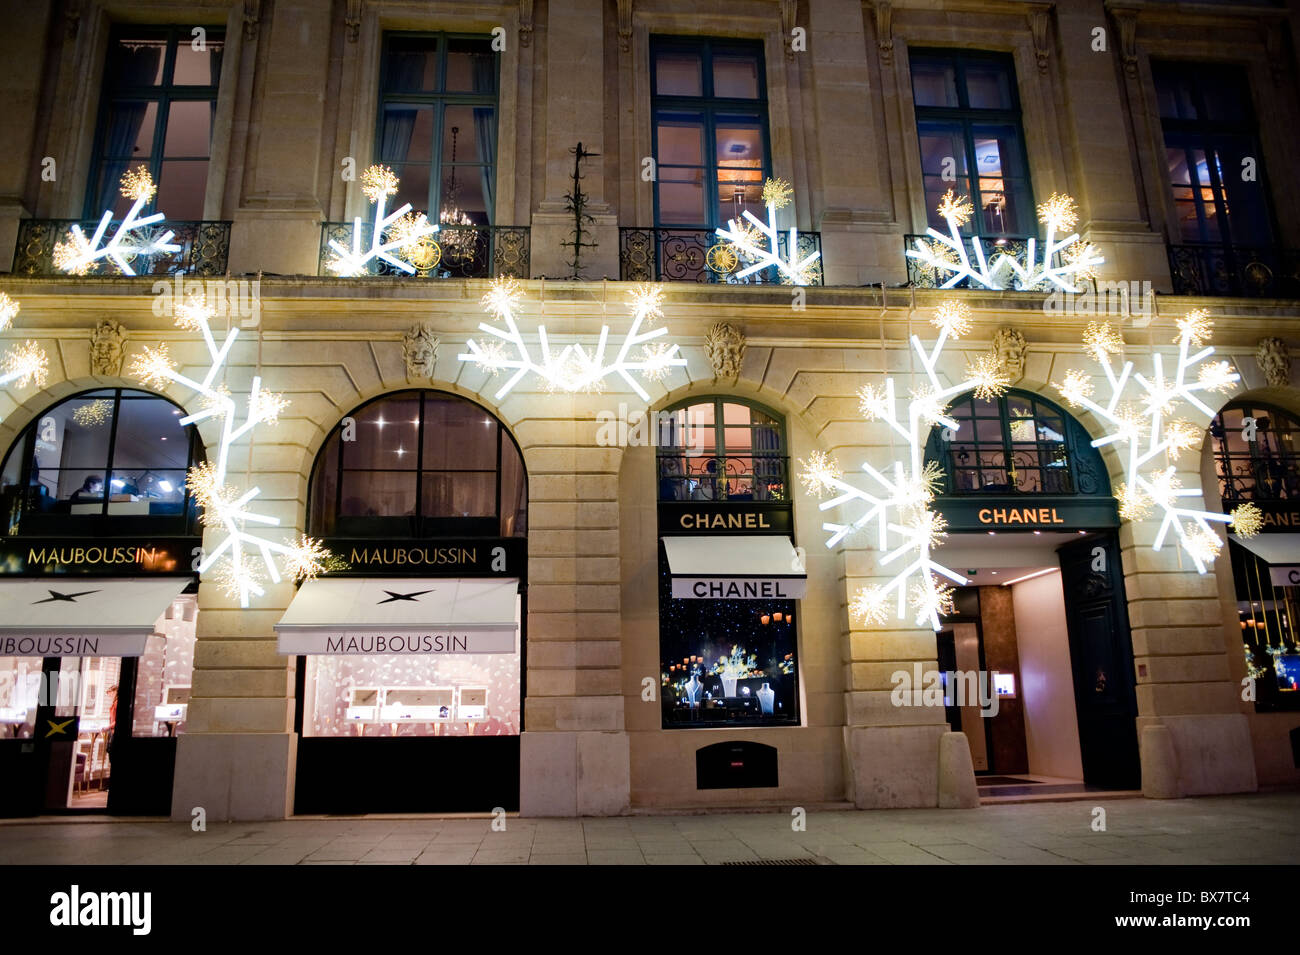 Paris, France, Chanel Store Front Windows, Fashion Display Stock Photo -  Alamy